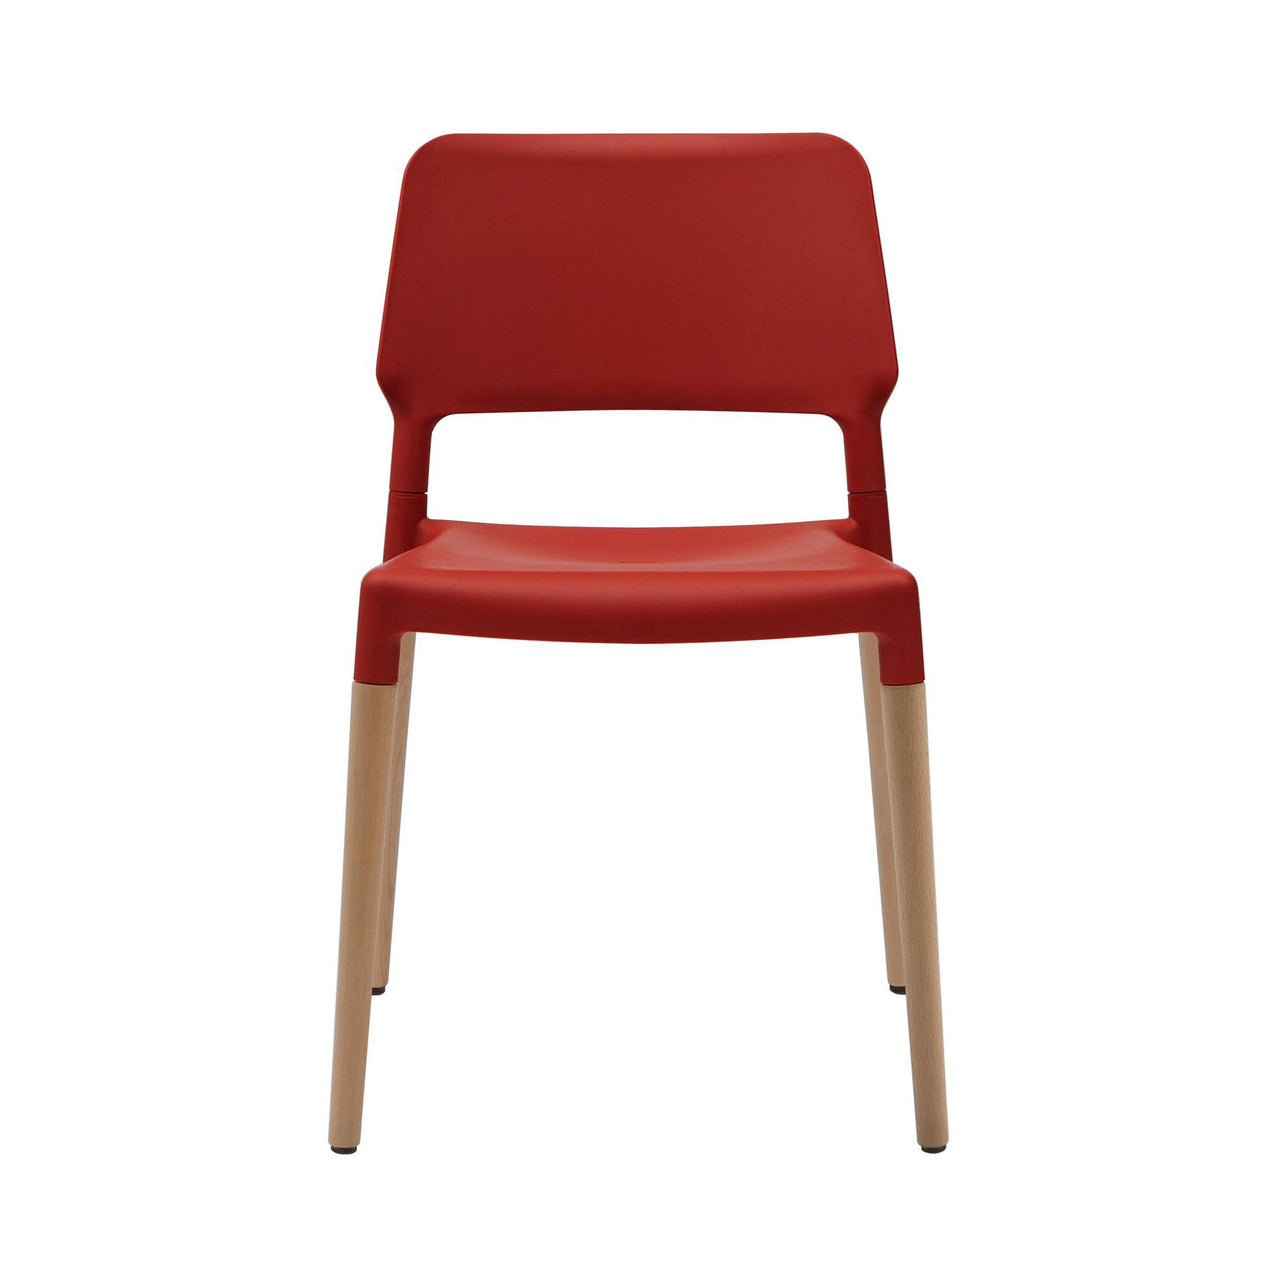 Belloch Chair: Red